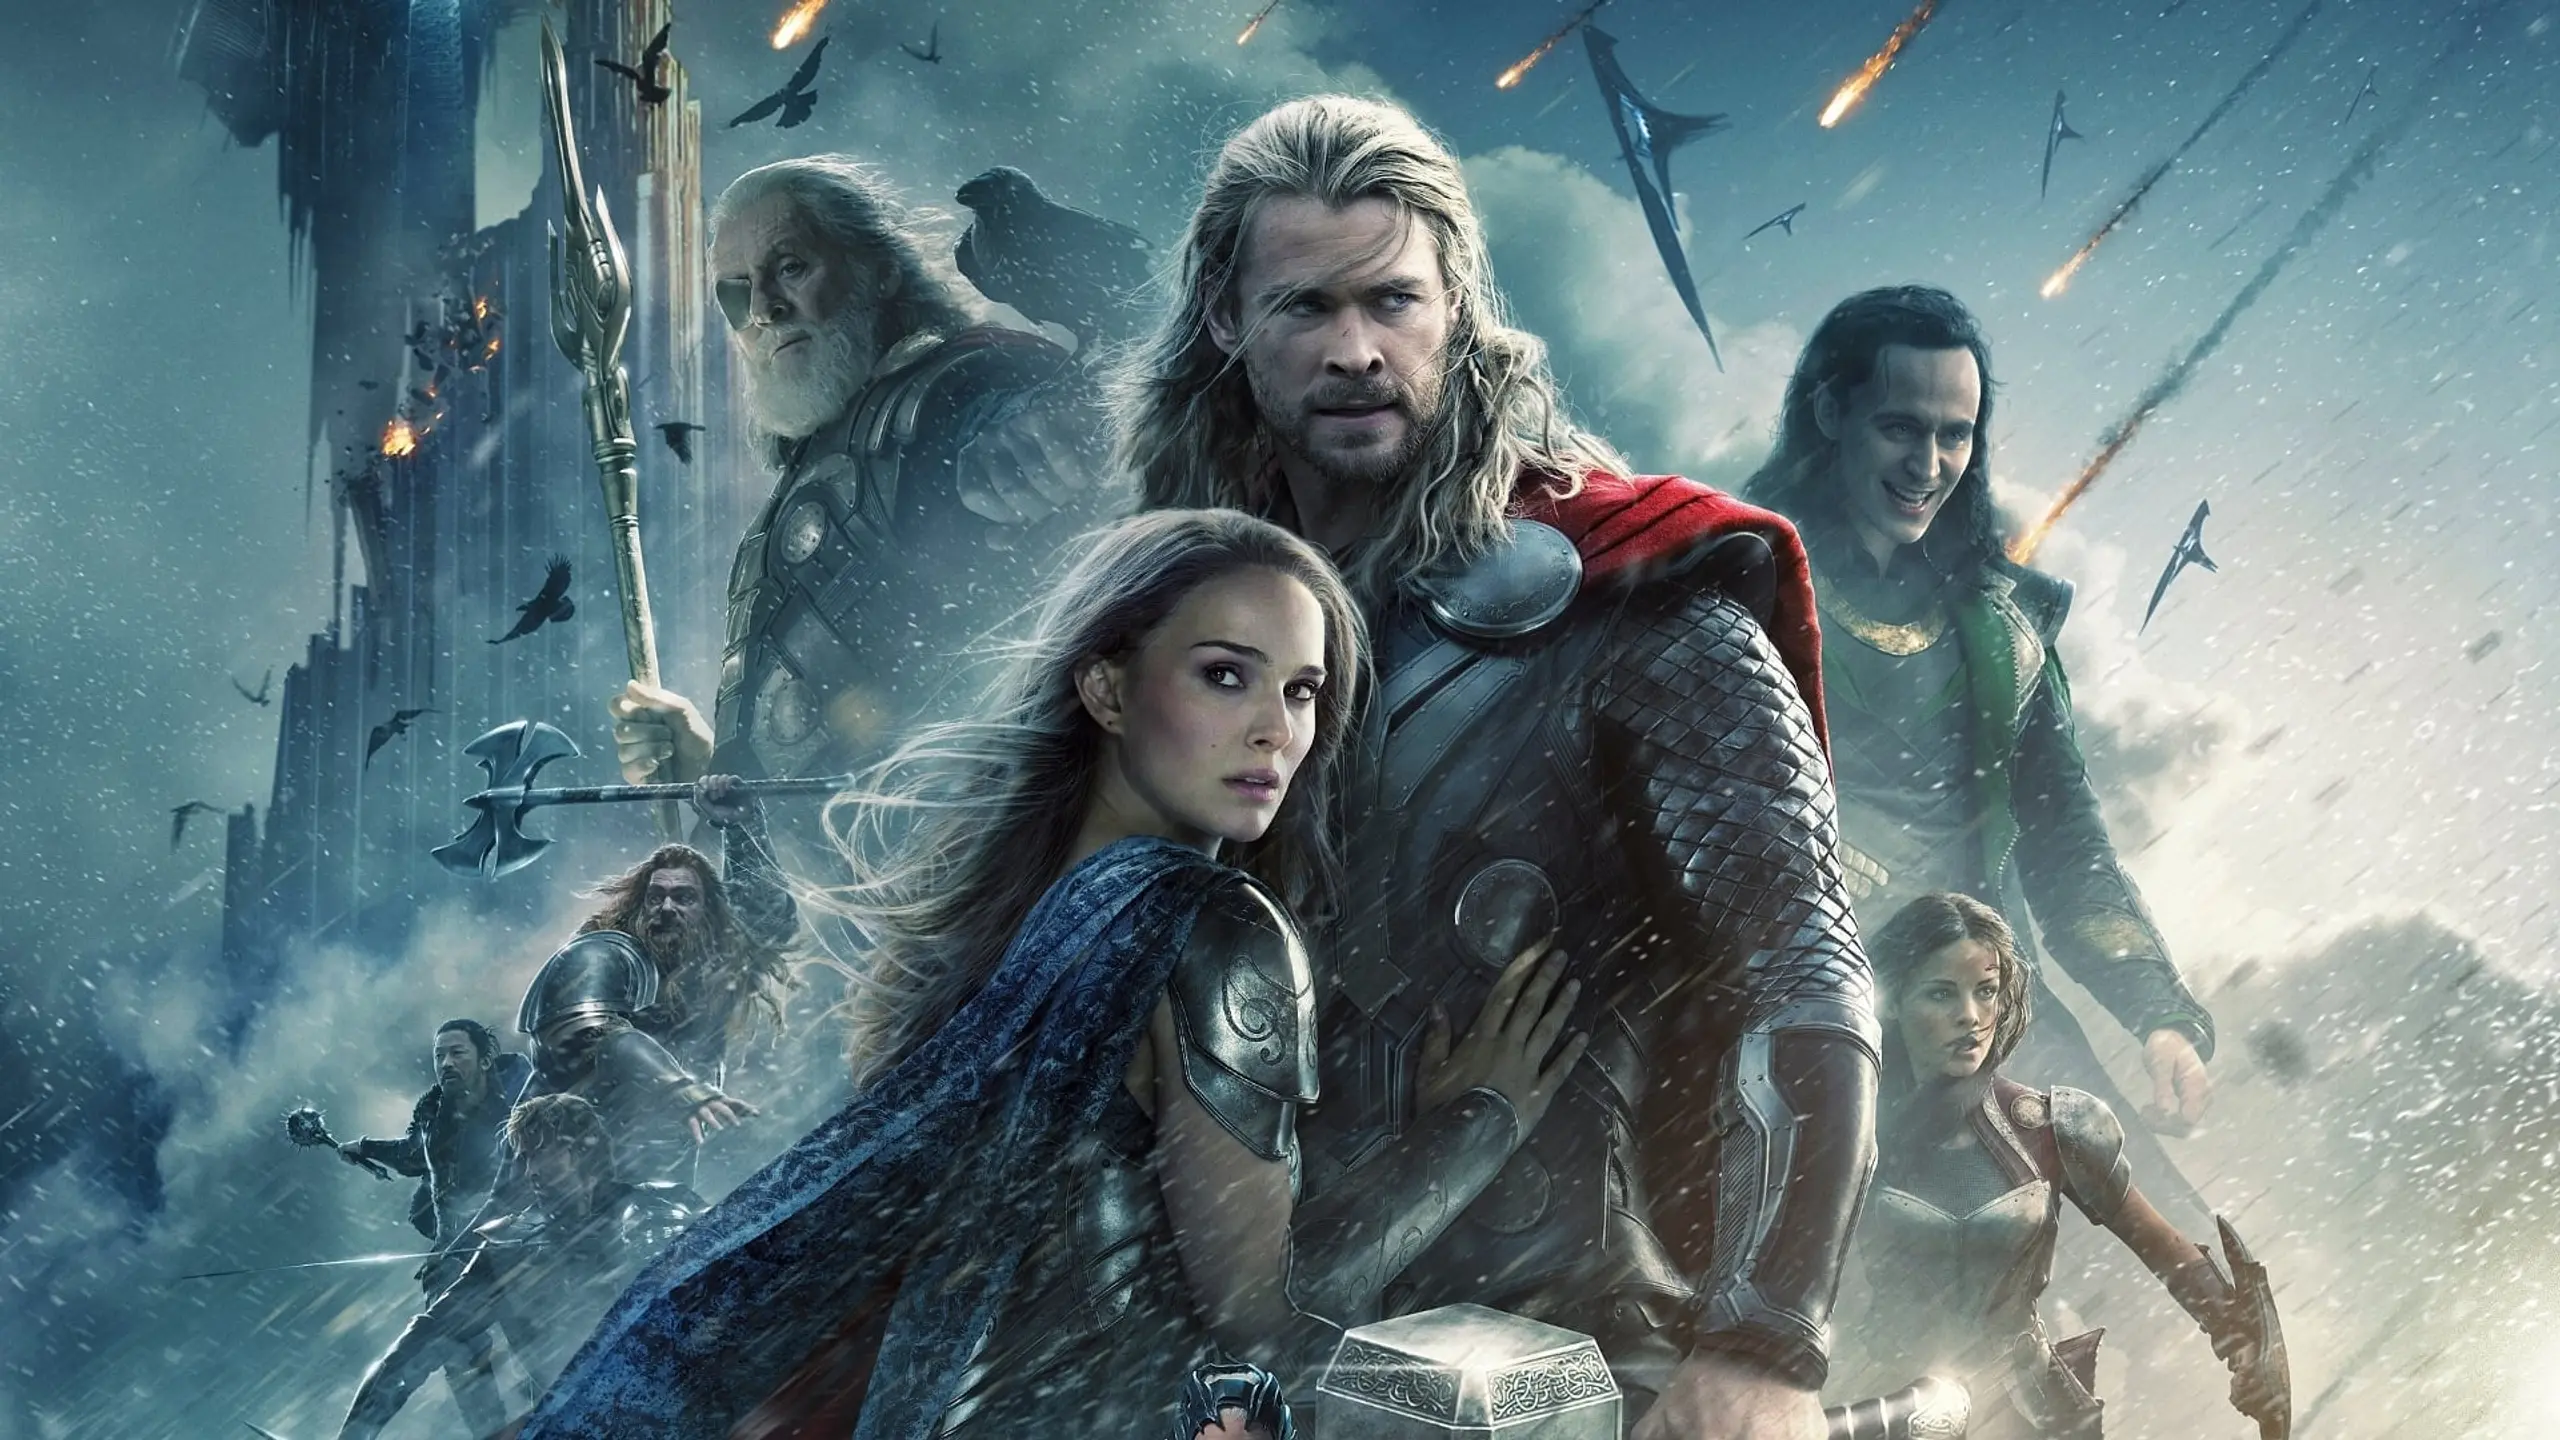 Thor - The Dark Kingdom